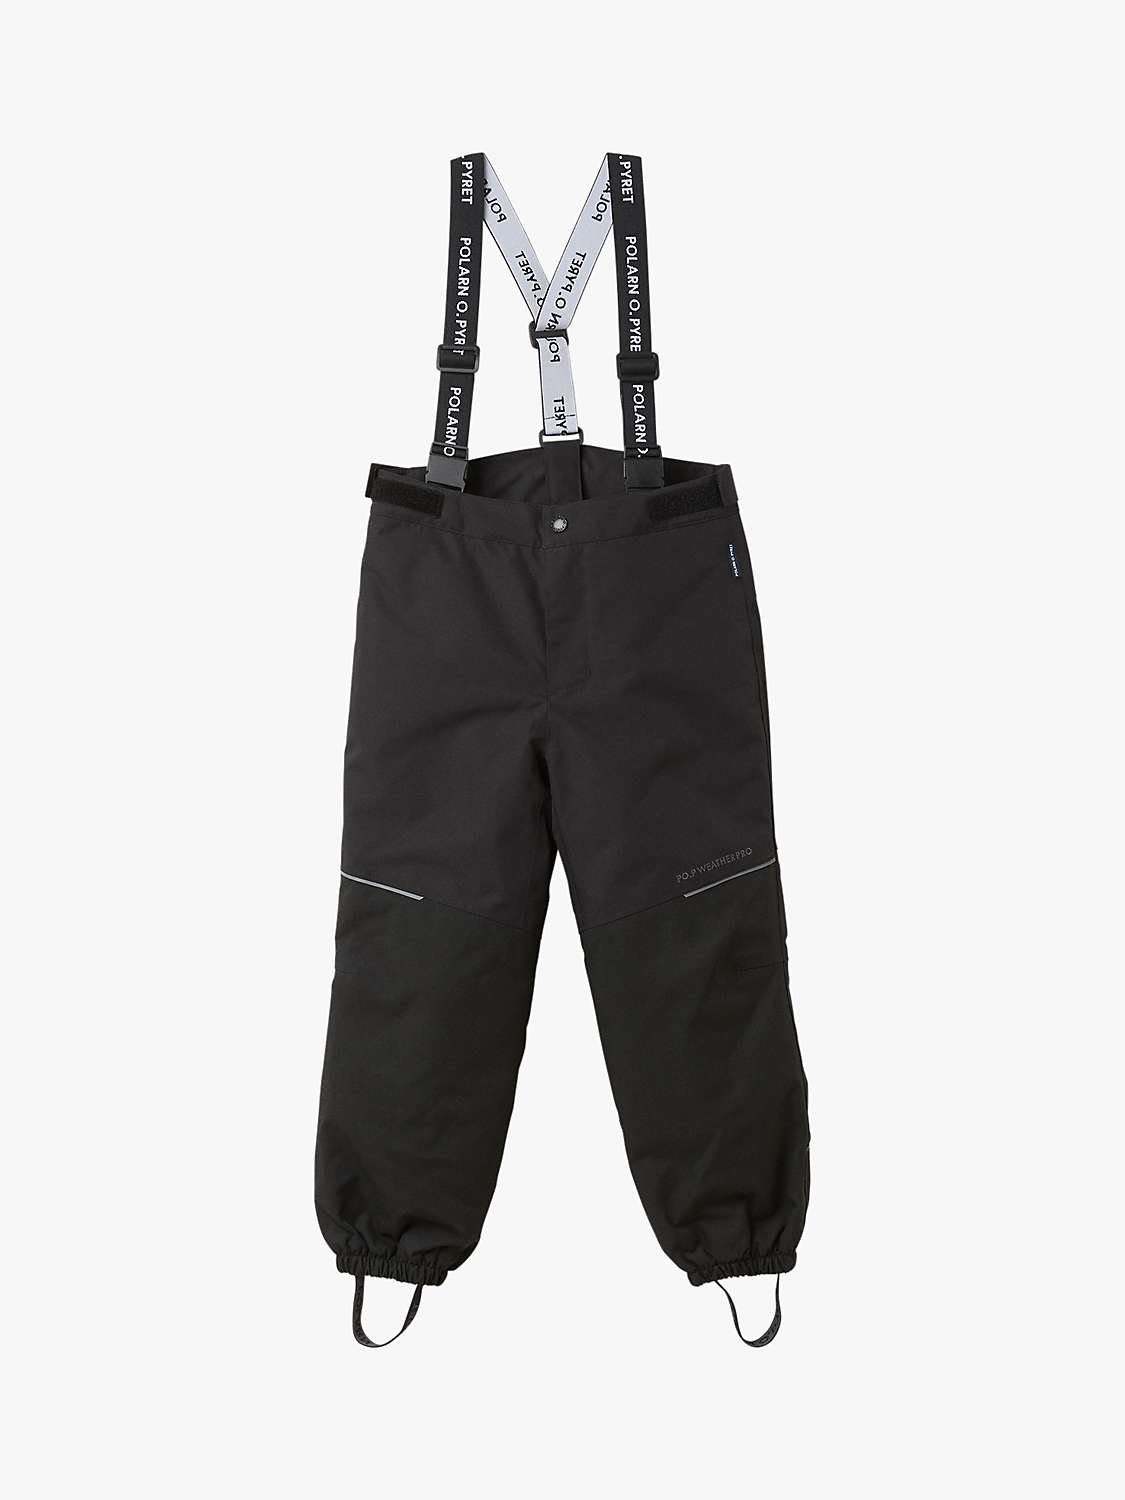 Buy Polarn O. Pyret Kids' 2-in-1 Waterproof Trousers, Black Online at johnlewis.com